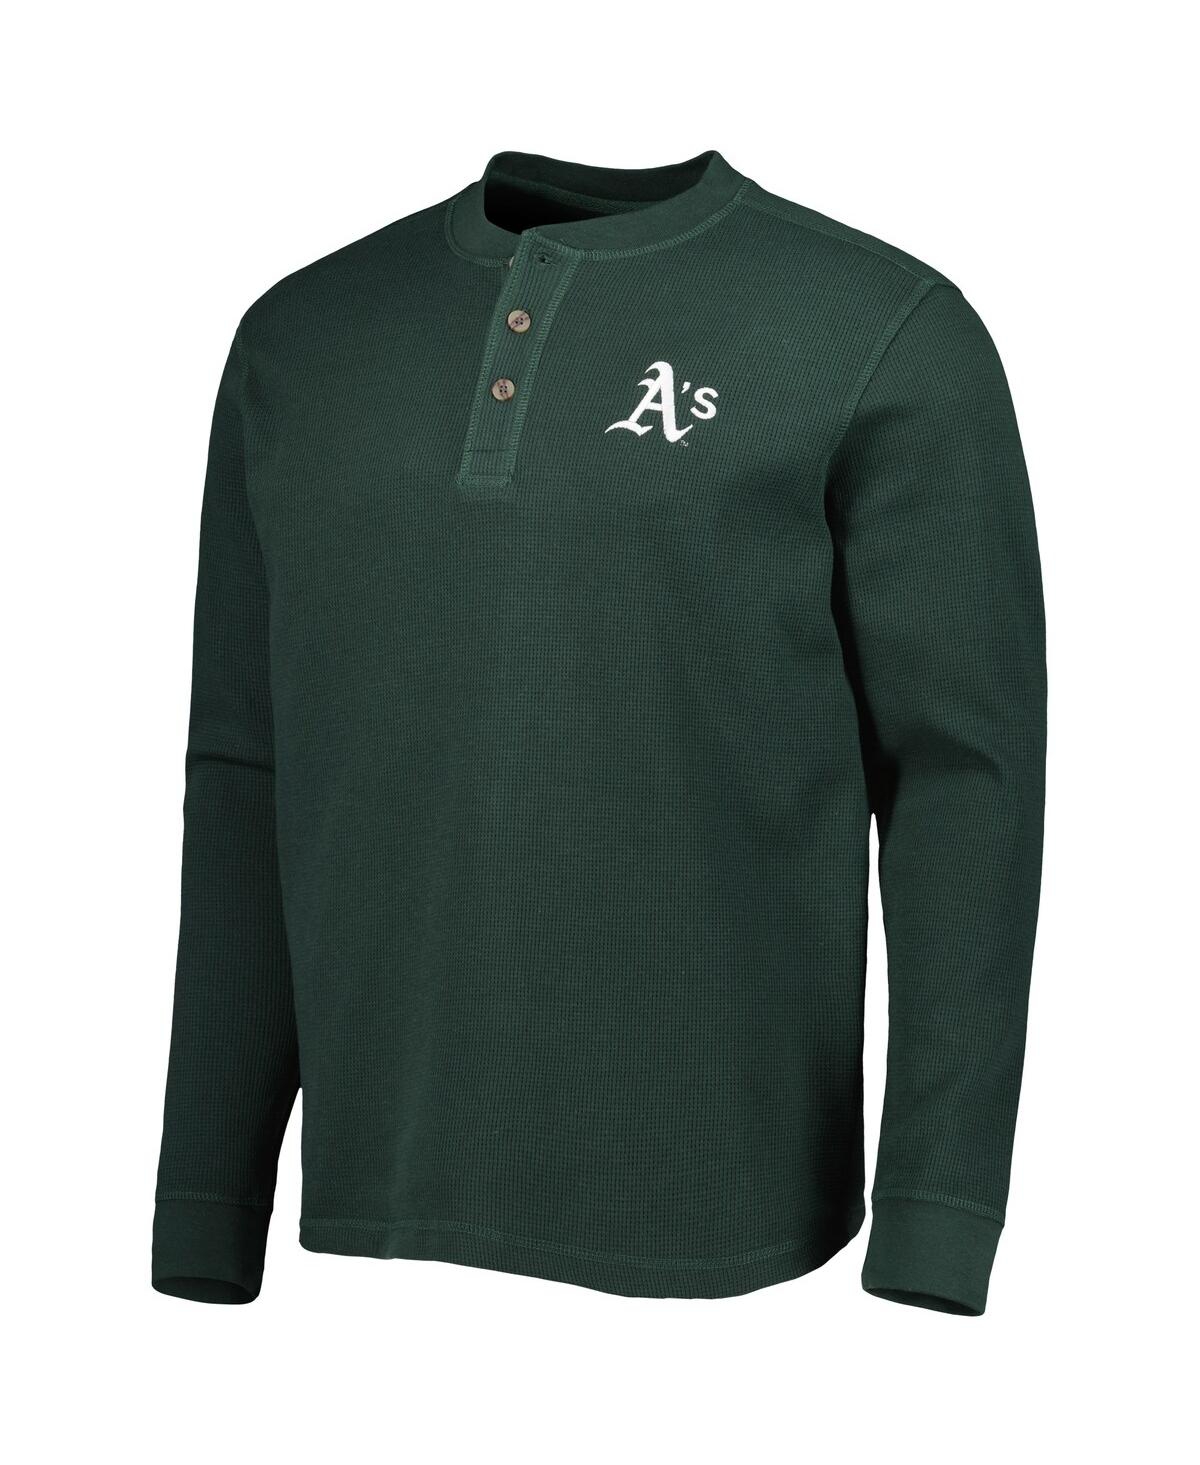 Shop Dunbrooke Men's  Oakland Athletics Green Maverick Long Sleeve T-shirt